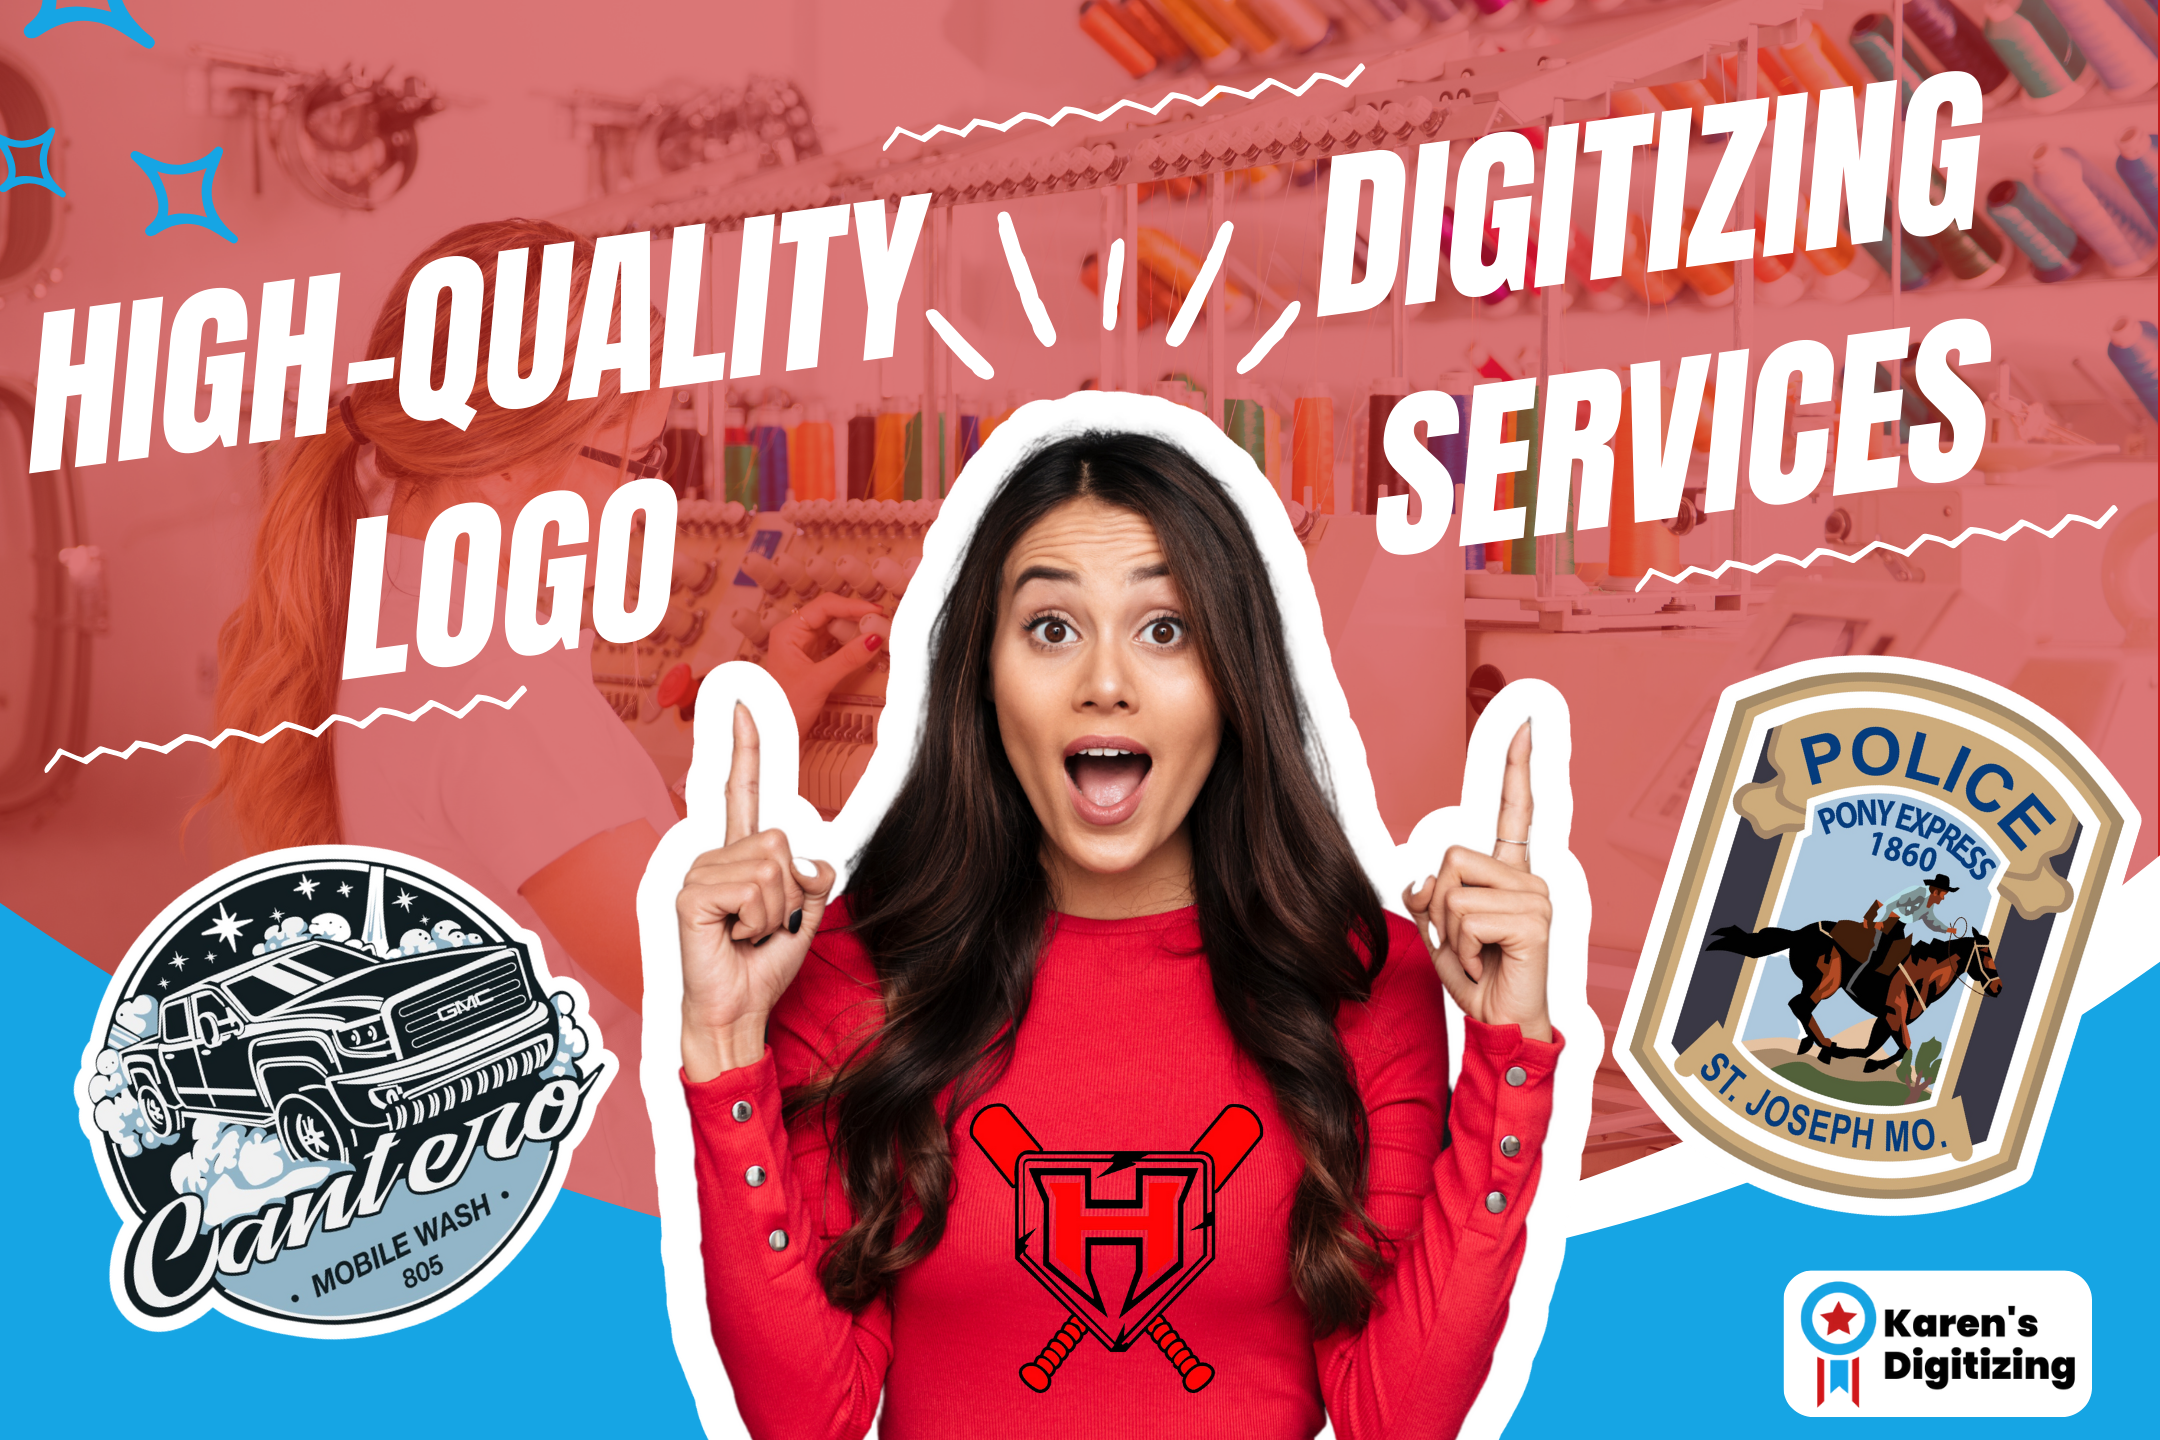 Get High-Quality Logo Digitizing Services!!